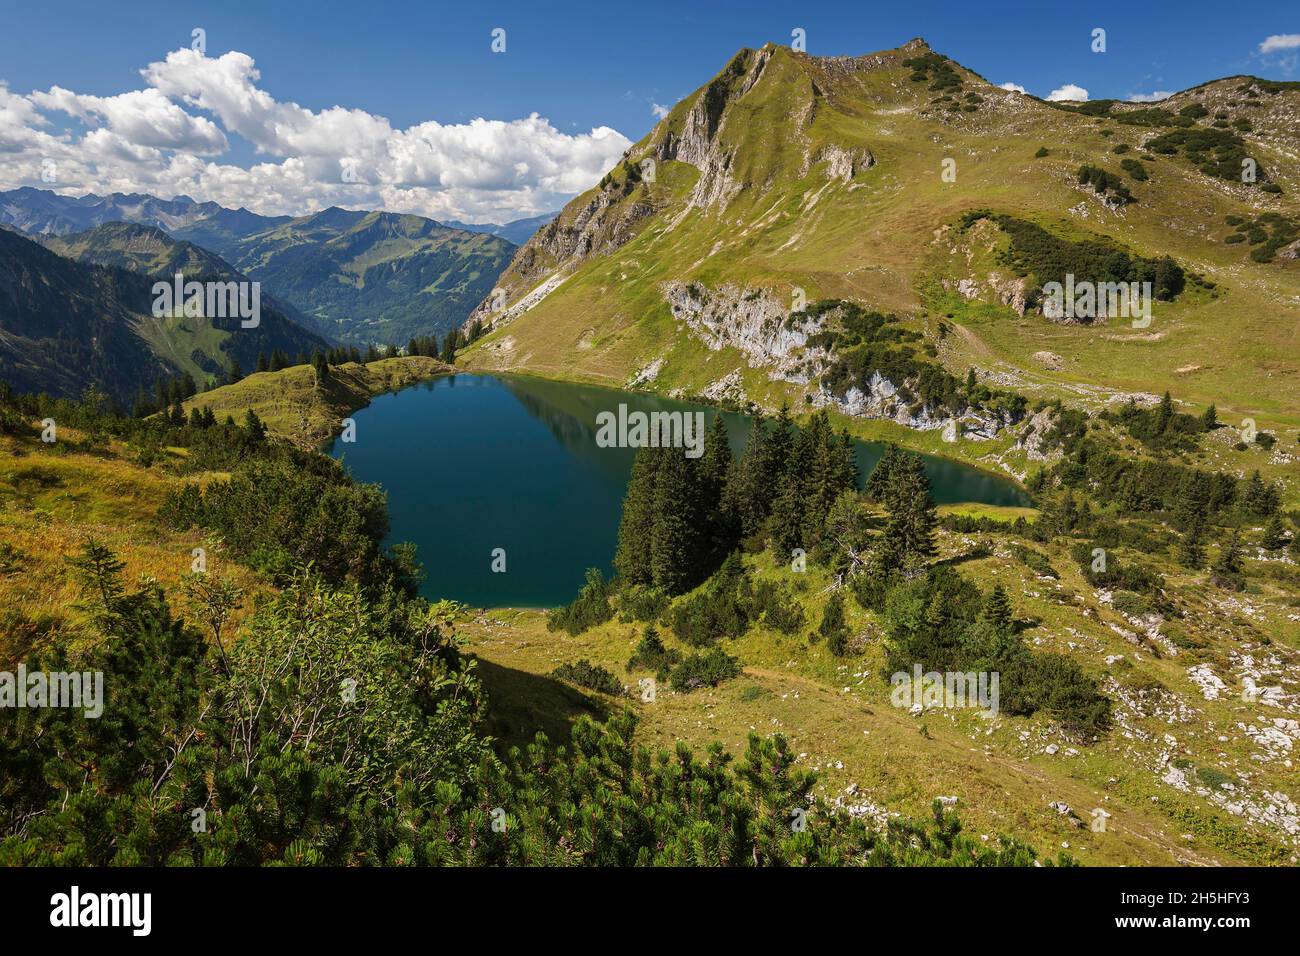 Lake Seealpsee, at Nebelhorn, near … – License image – 71116433